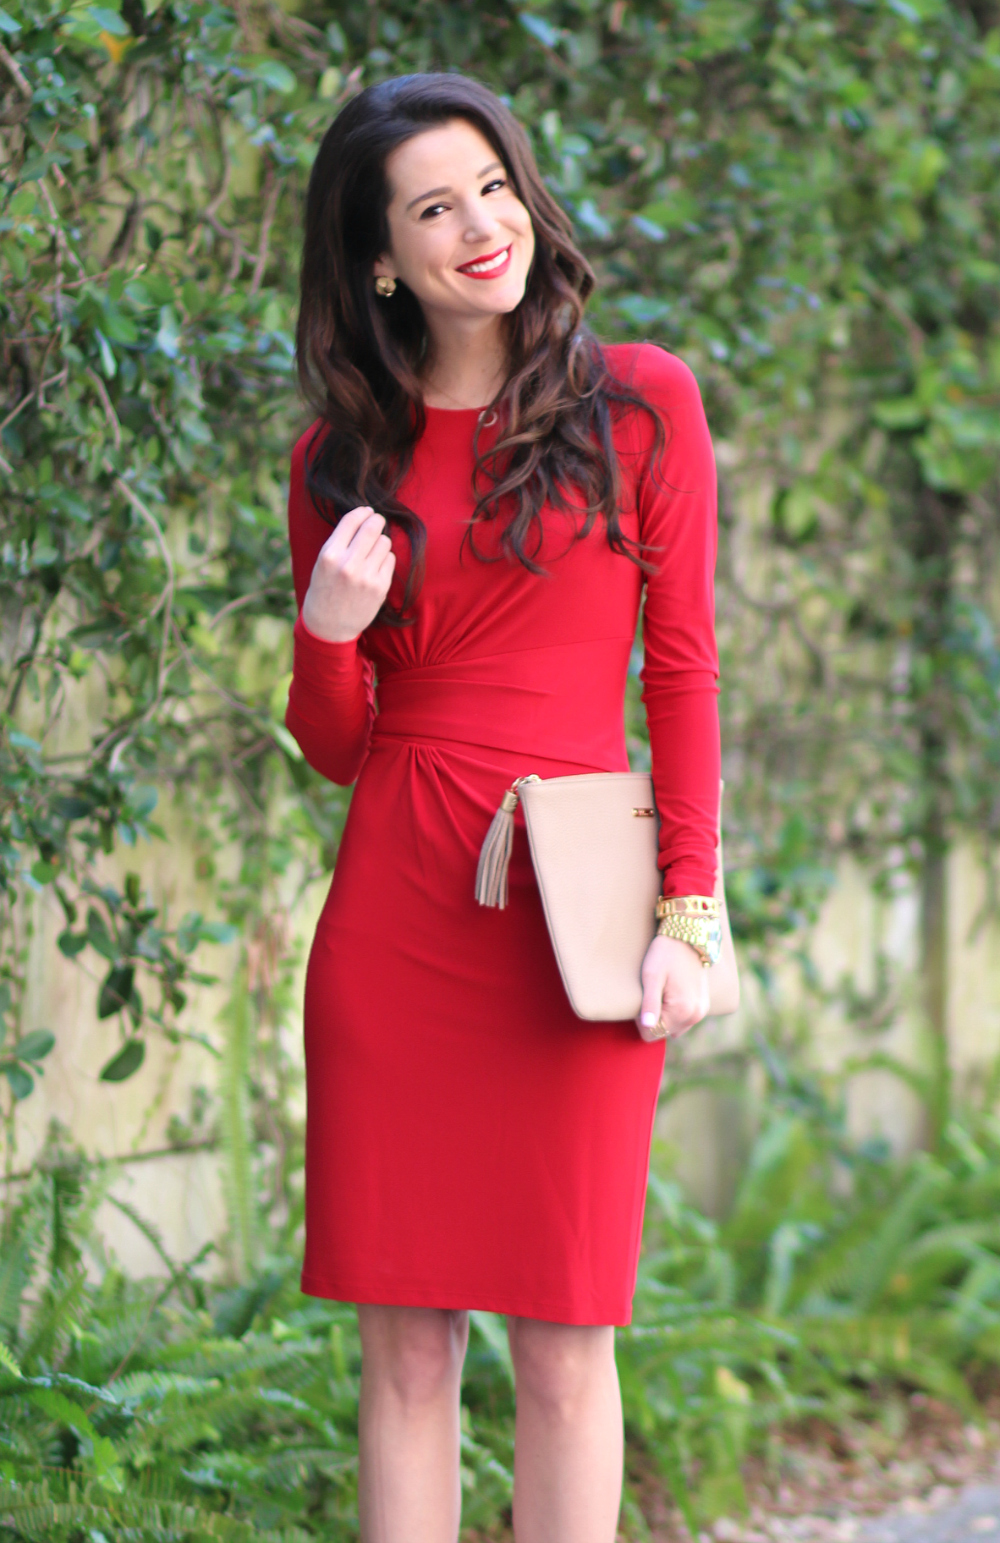 Ralph Lauren Red Crowneck Dress - Diary of a Debutante